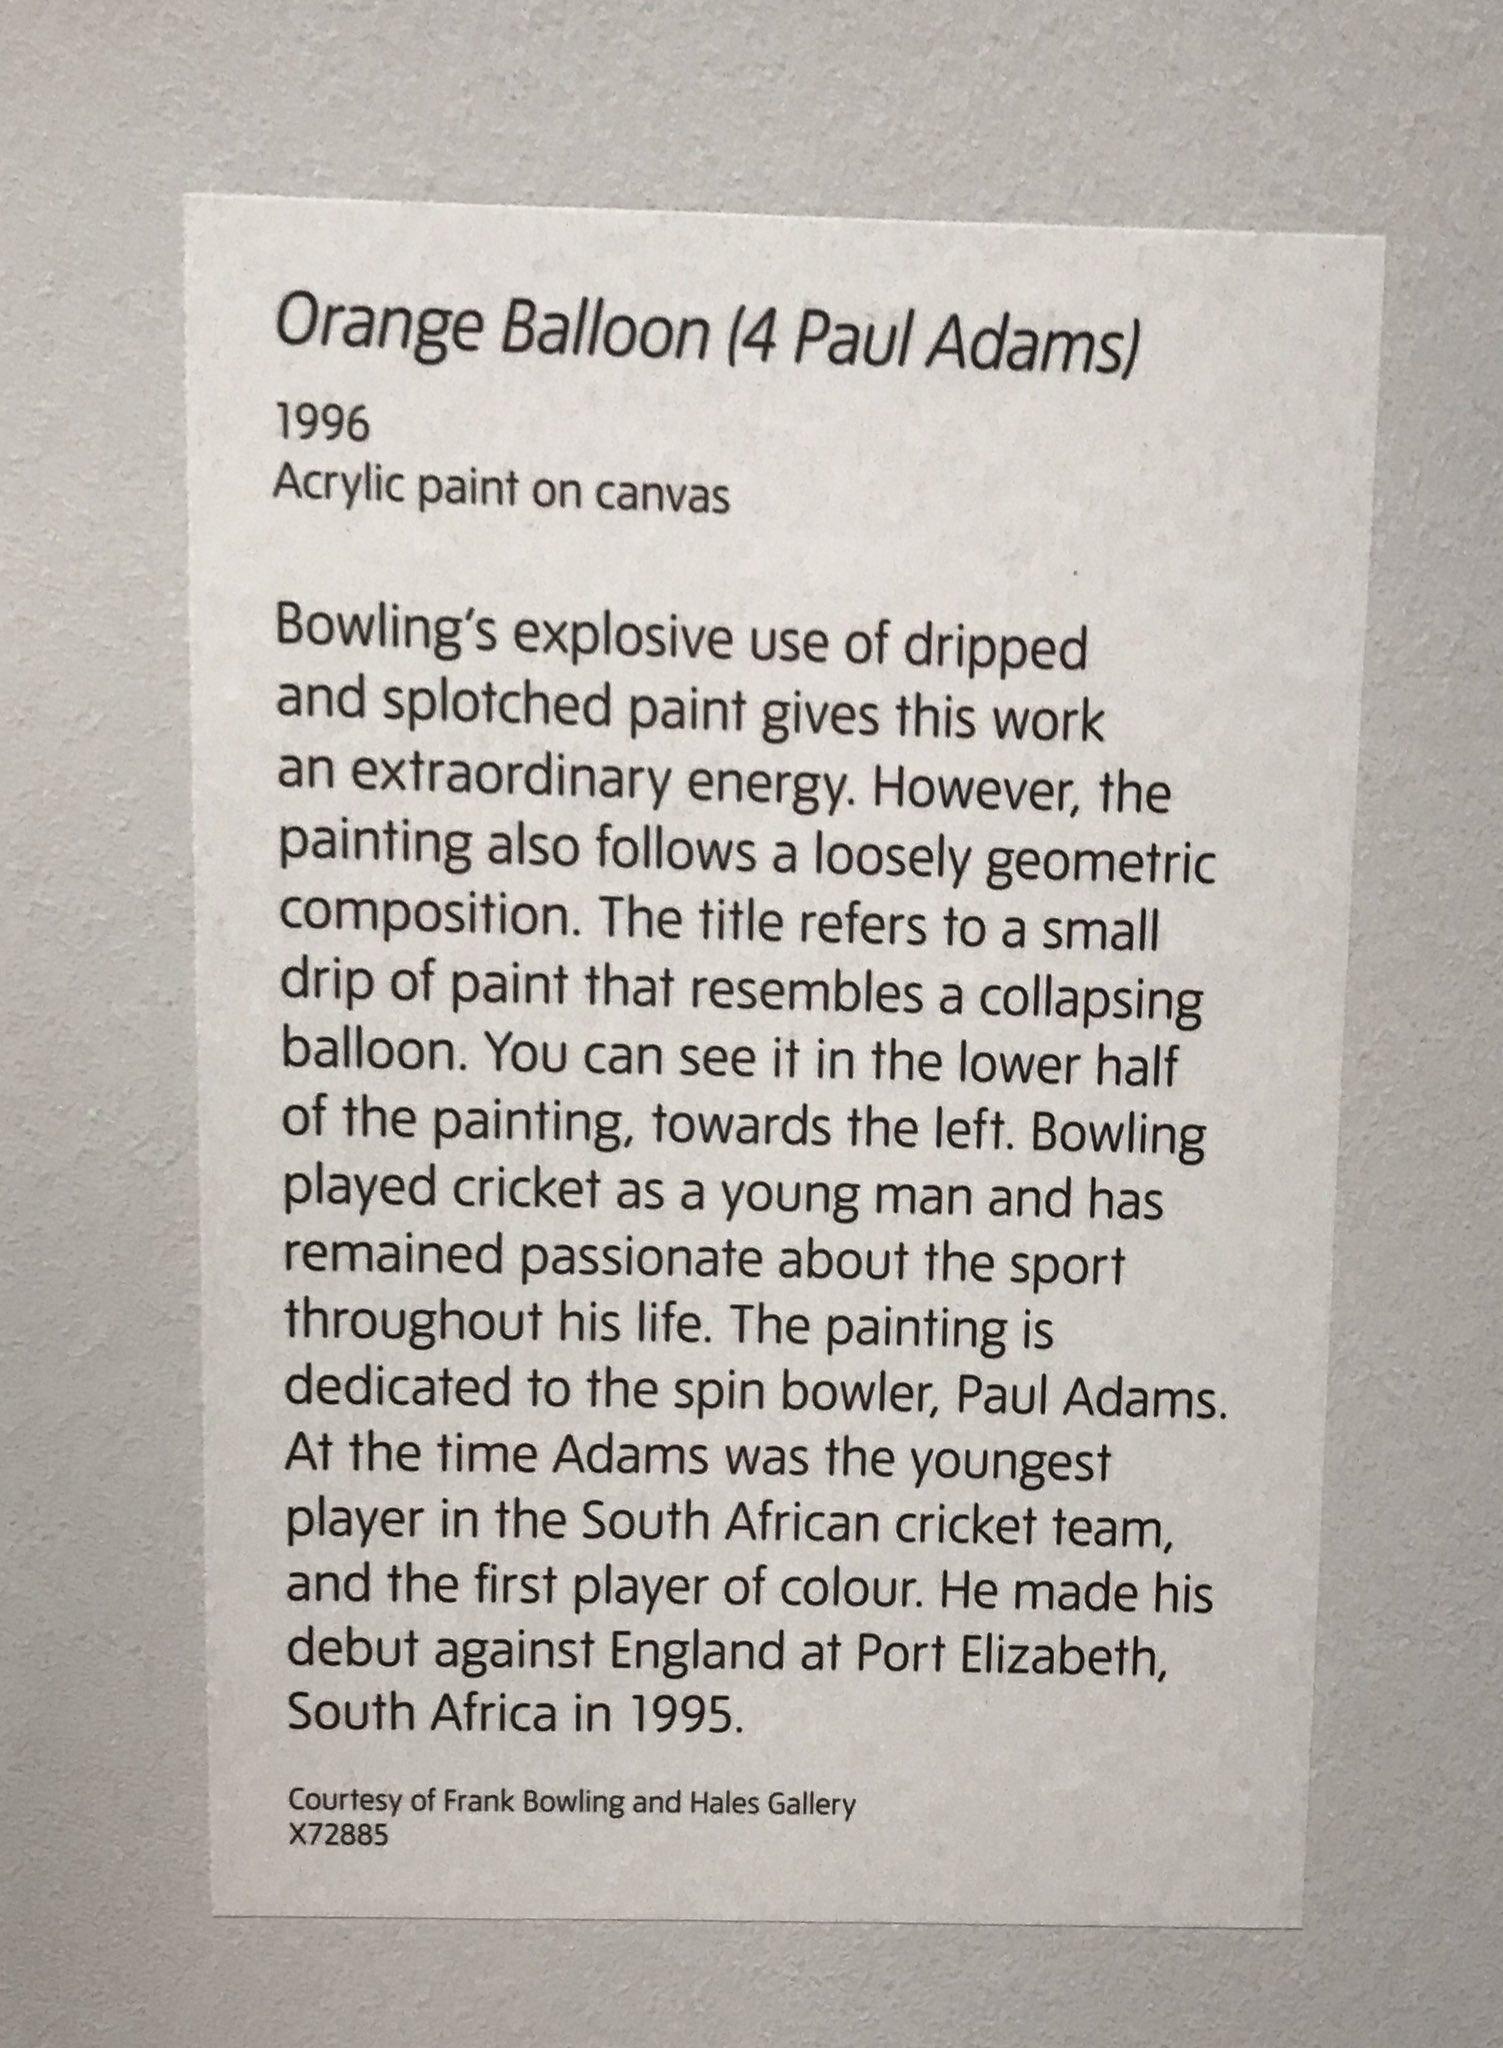 Orange Balloon (4 Paul Adams) on display in Tate Britain